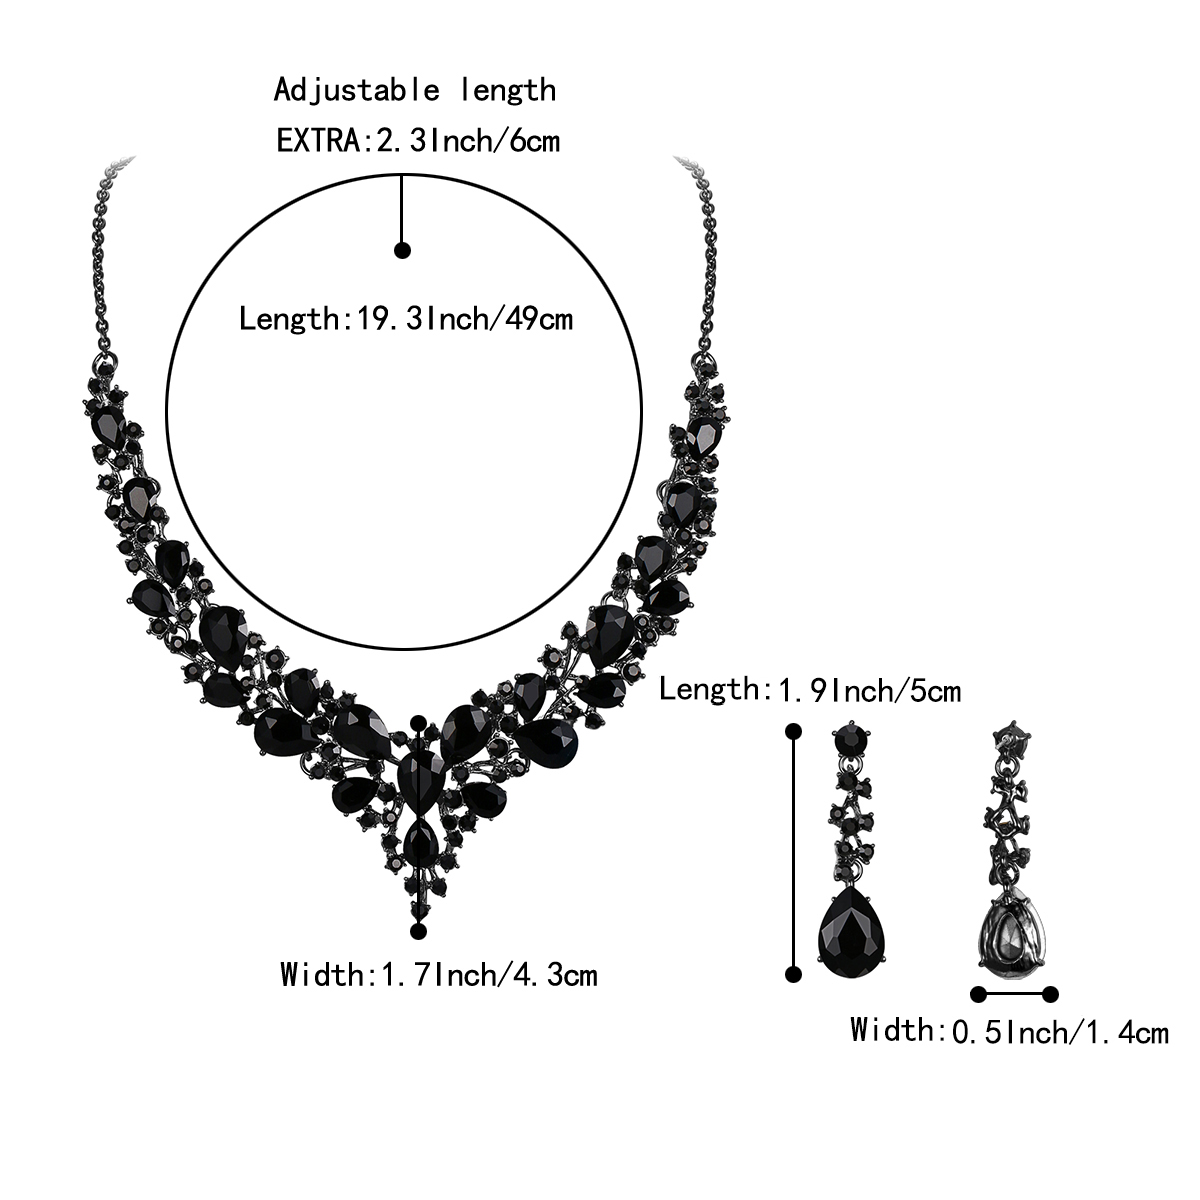 Wedure Wedding Bridal Necklace Earrings Jewelry Set for Women, Austrian Crystal Teardrop Cluster Statement Necklace Dangle Earrings Set Black Black-Silver-Tone - image 5 of 5